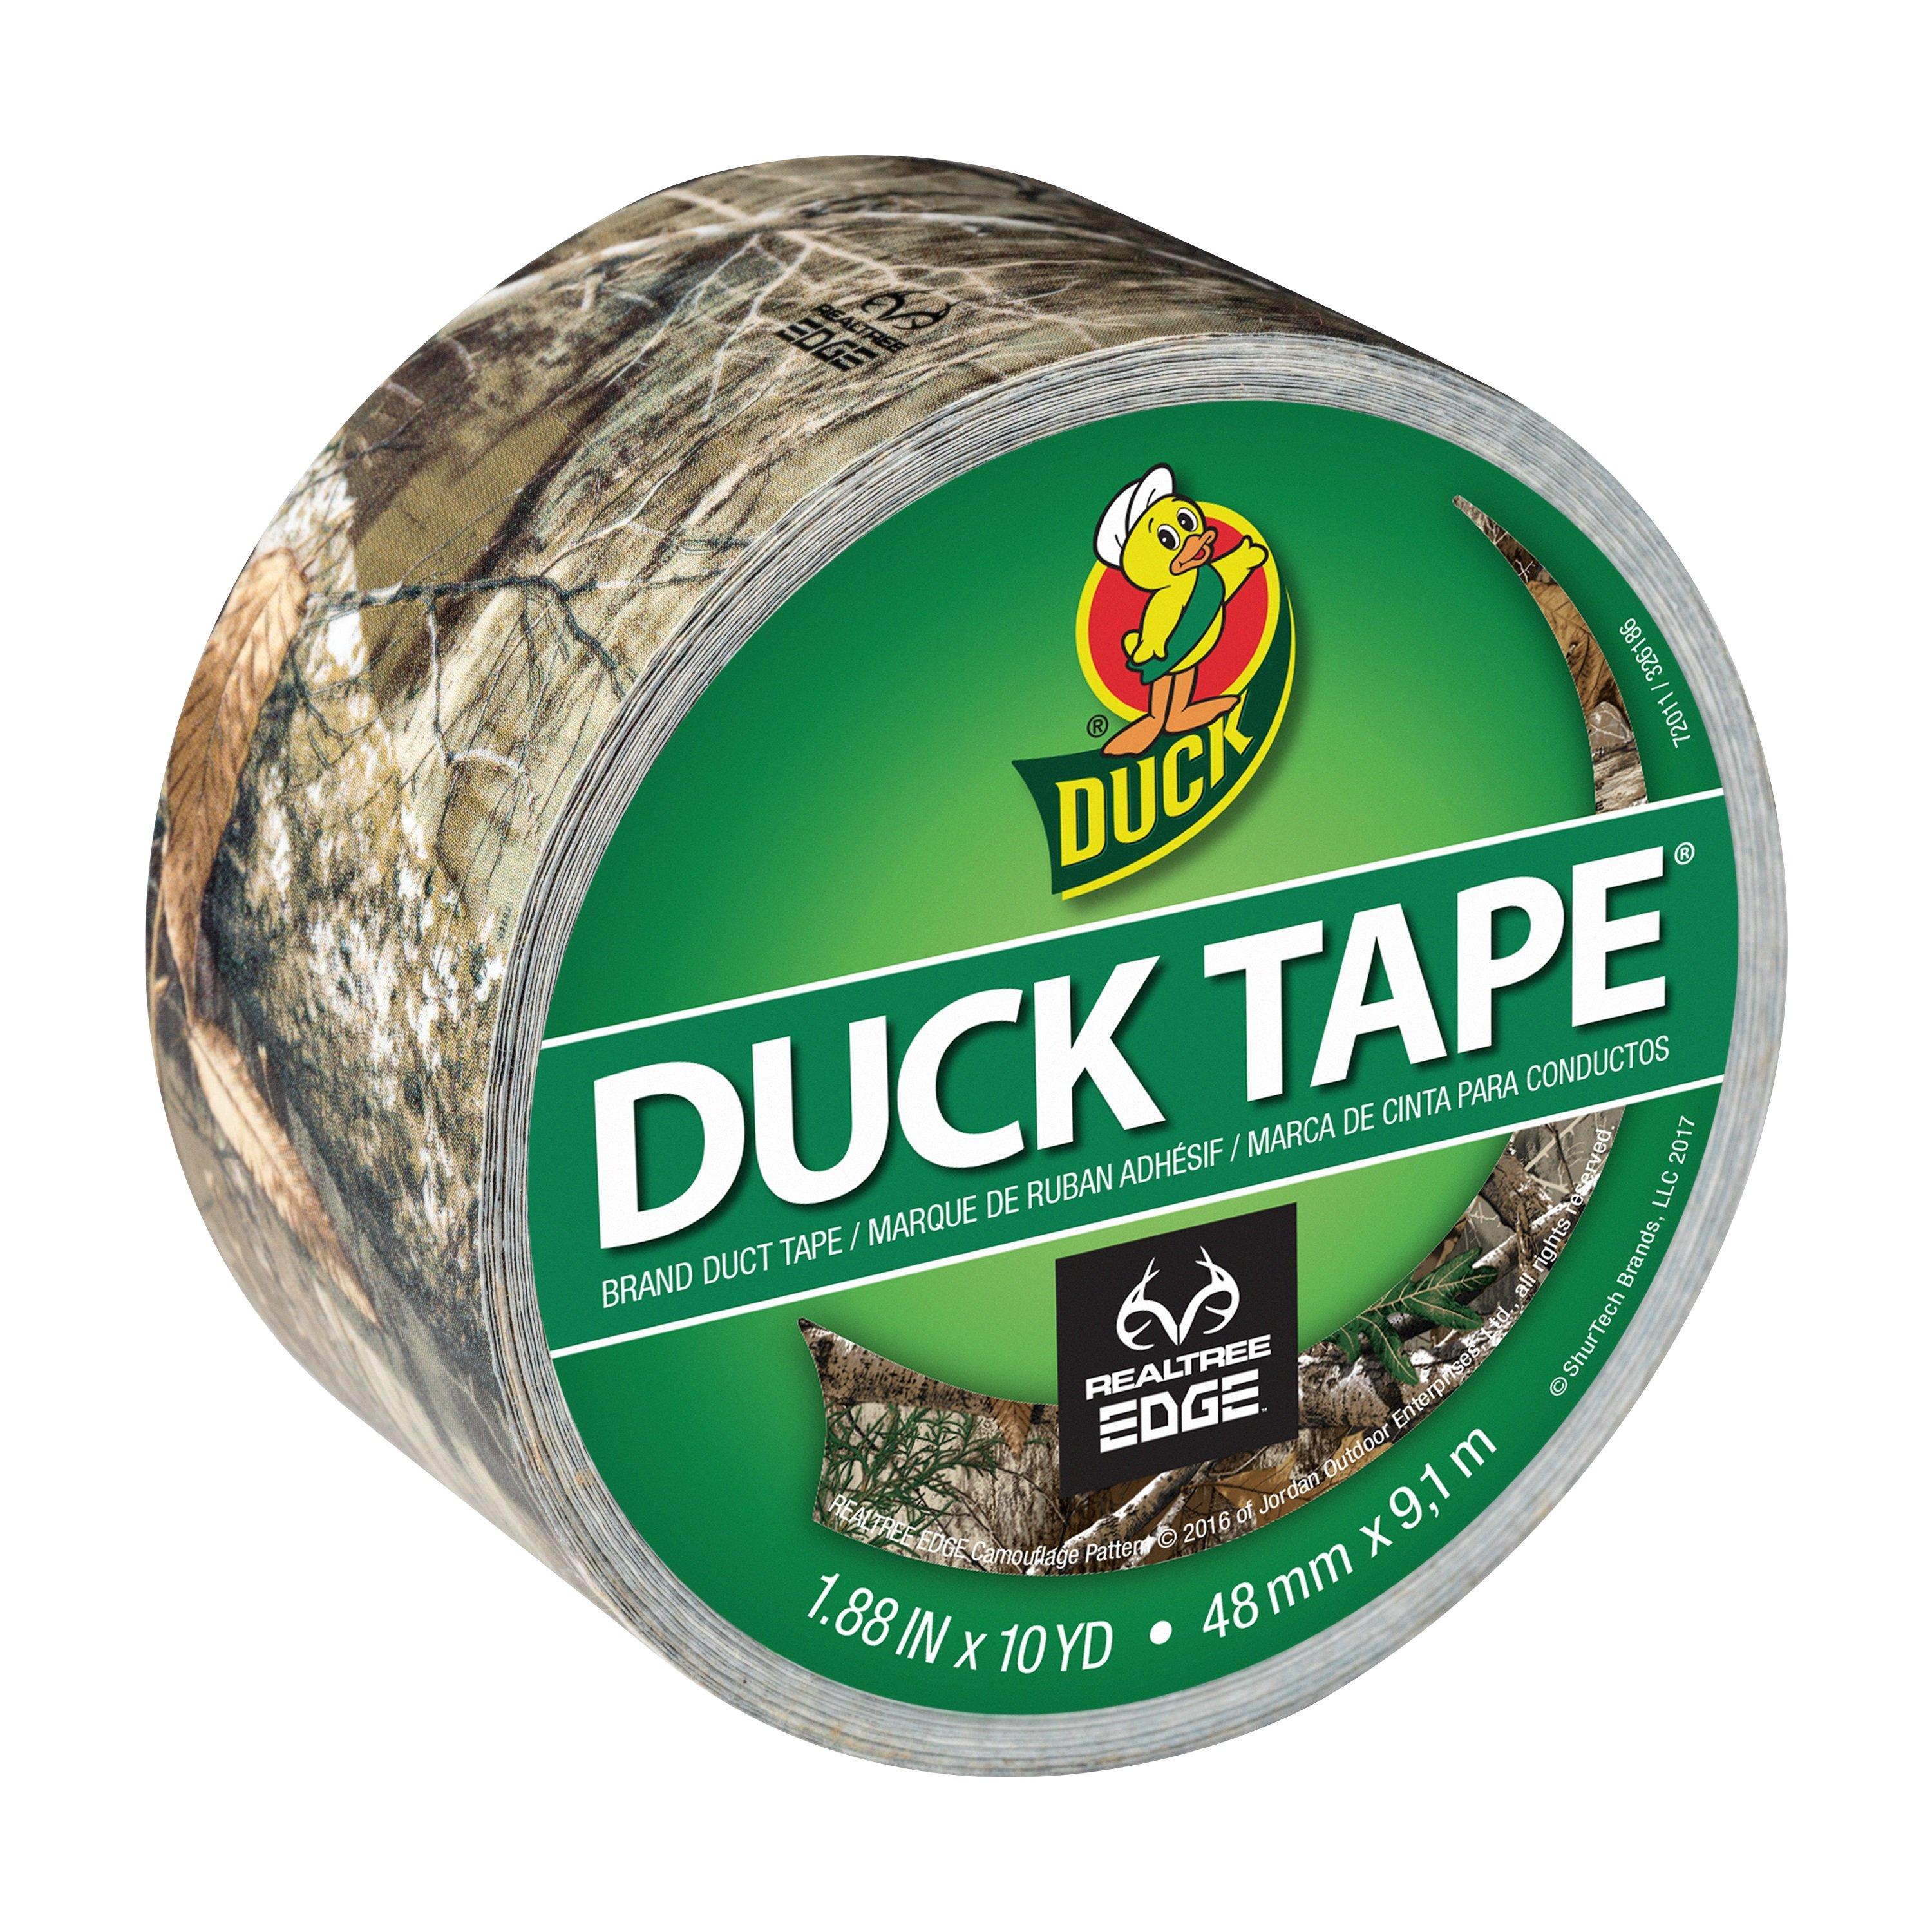 Realtree EDGE Camo Duck Tape Brand Duct Tape